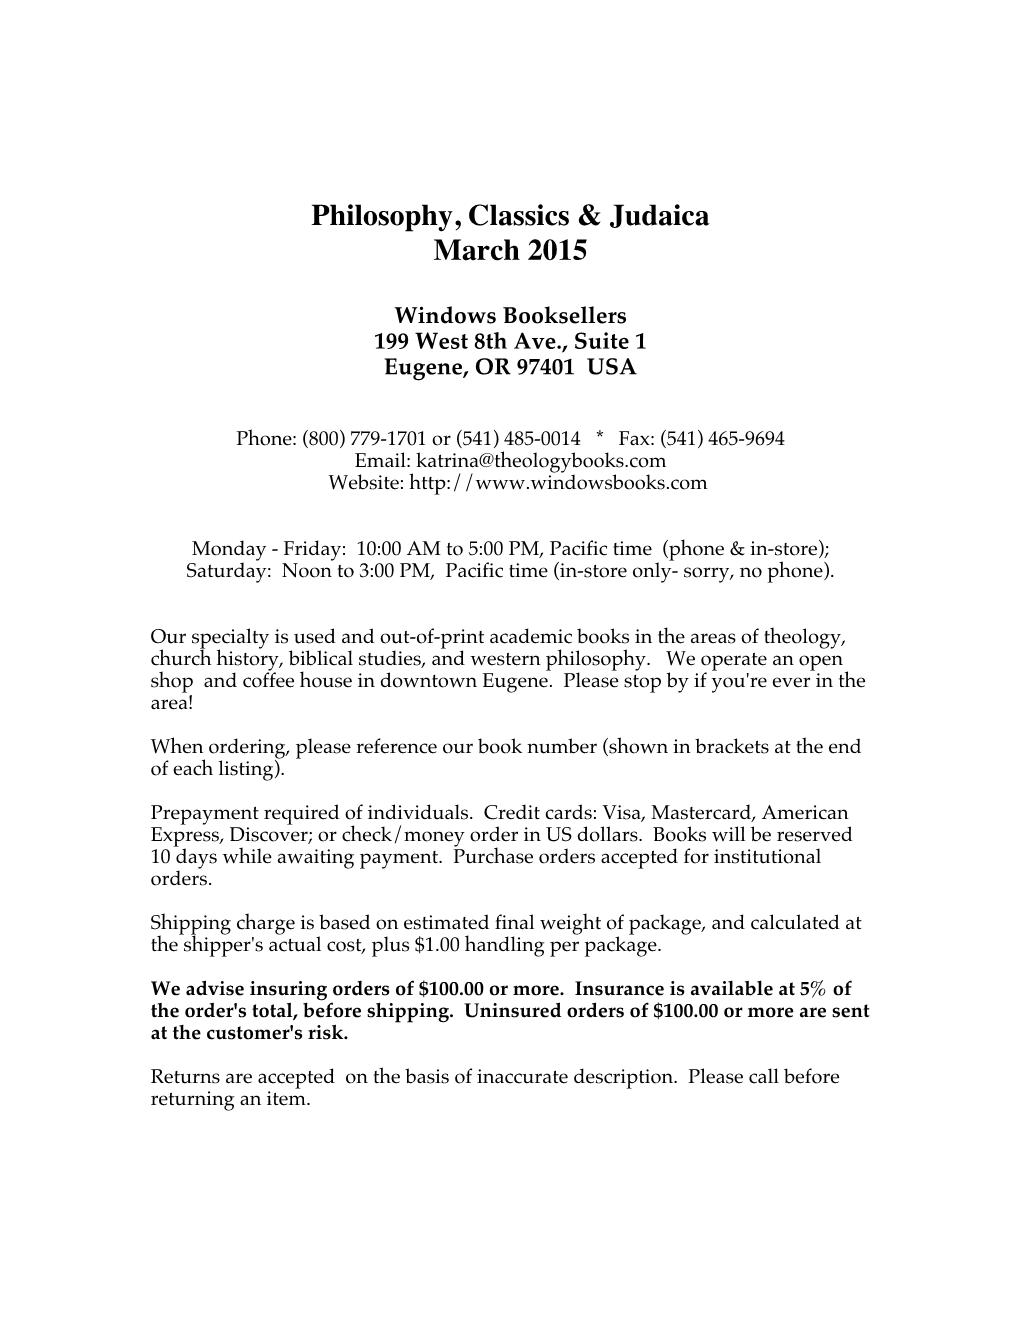 Philosophy, Classics & Judaica, March 2015